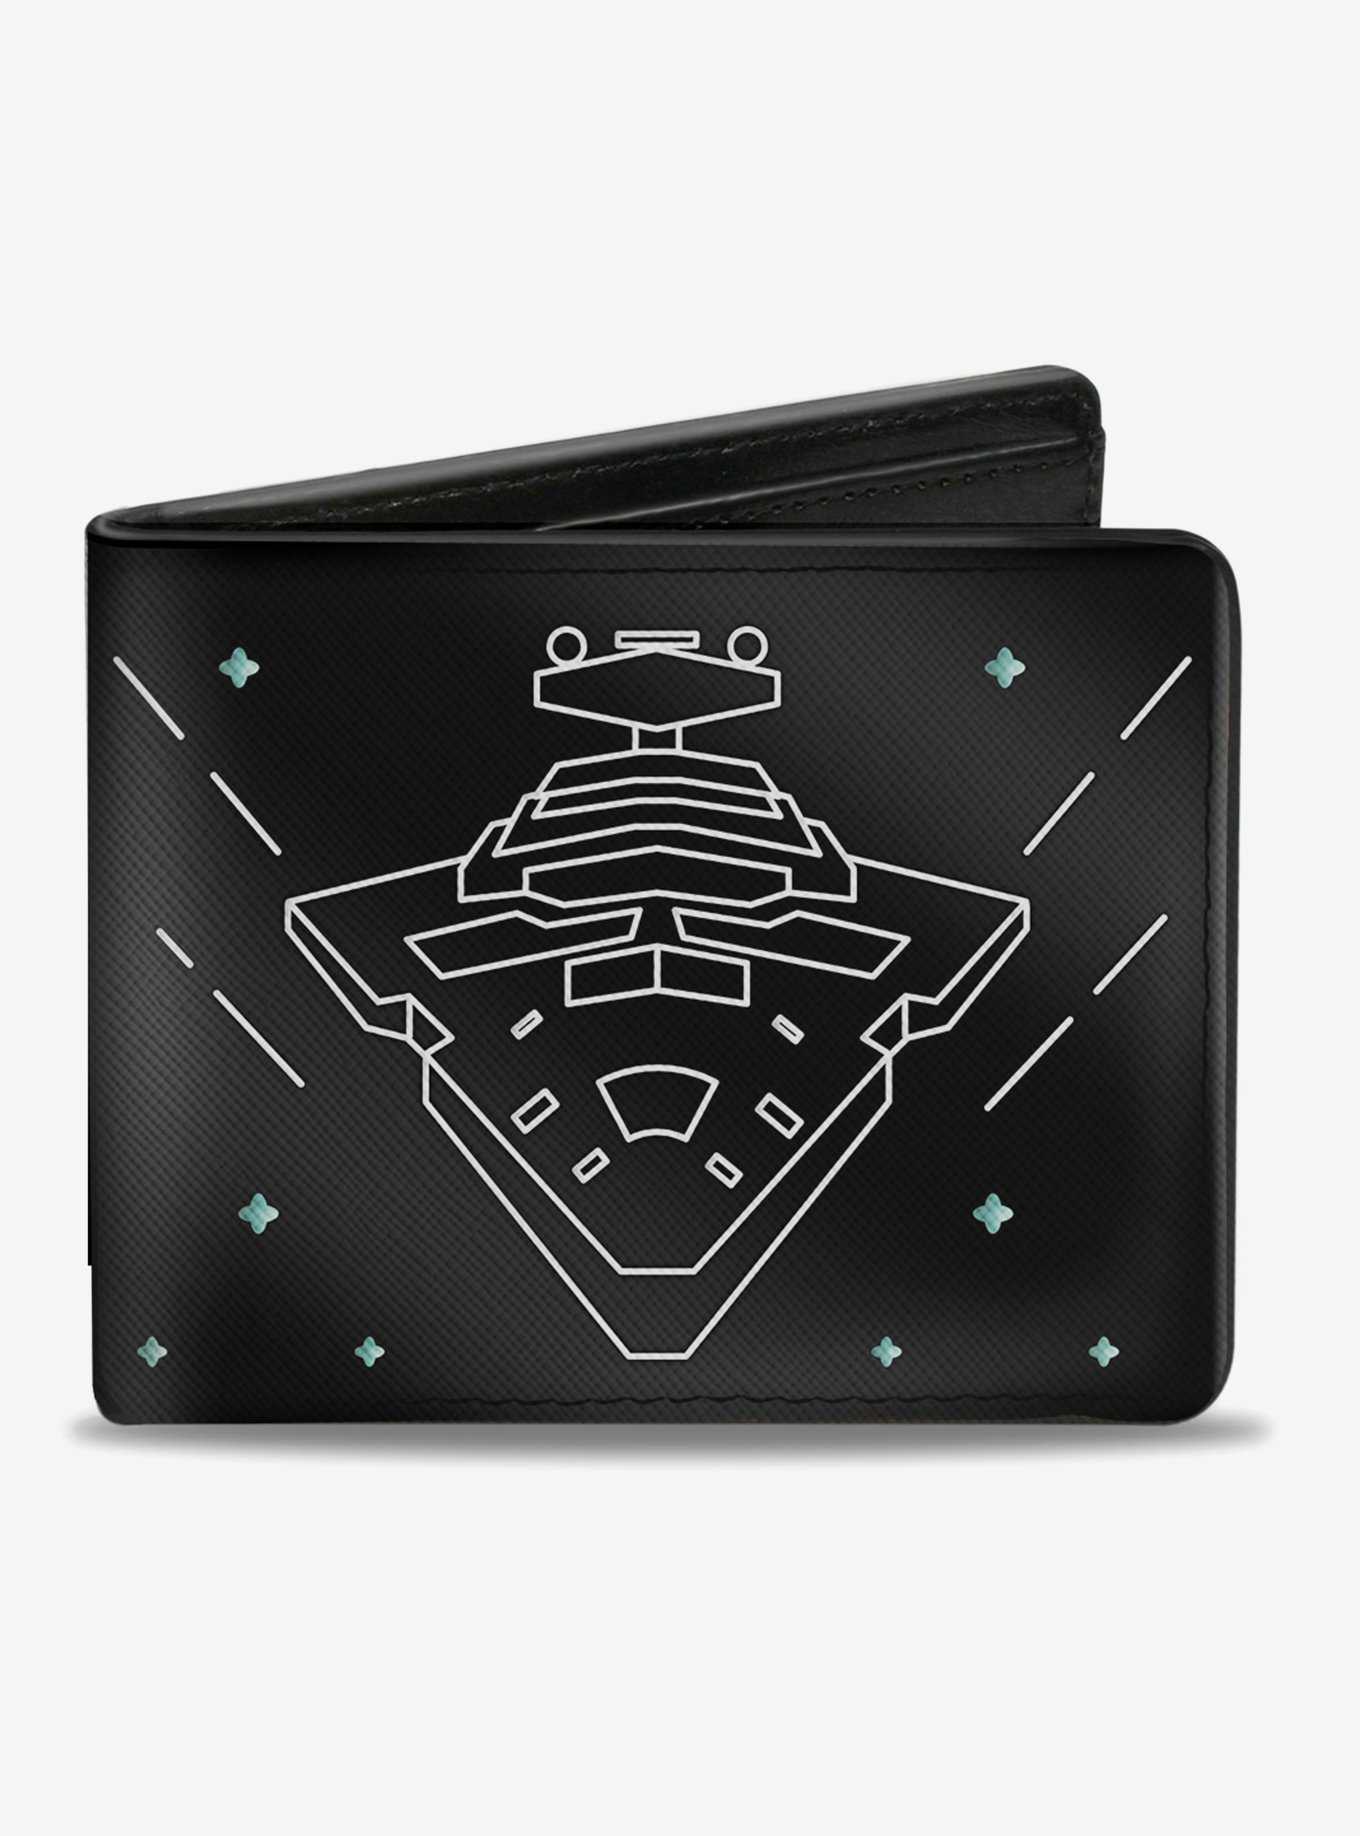 Star Wars Imperial Star Destroyer Death Star Tie Fighters Bi-Fold Wallet, , hi-res